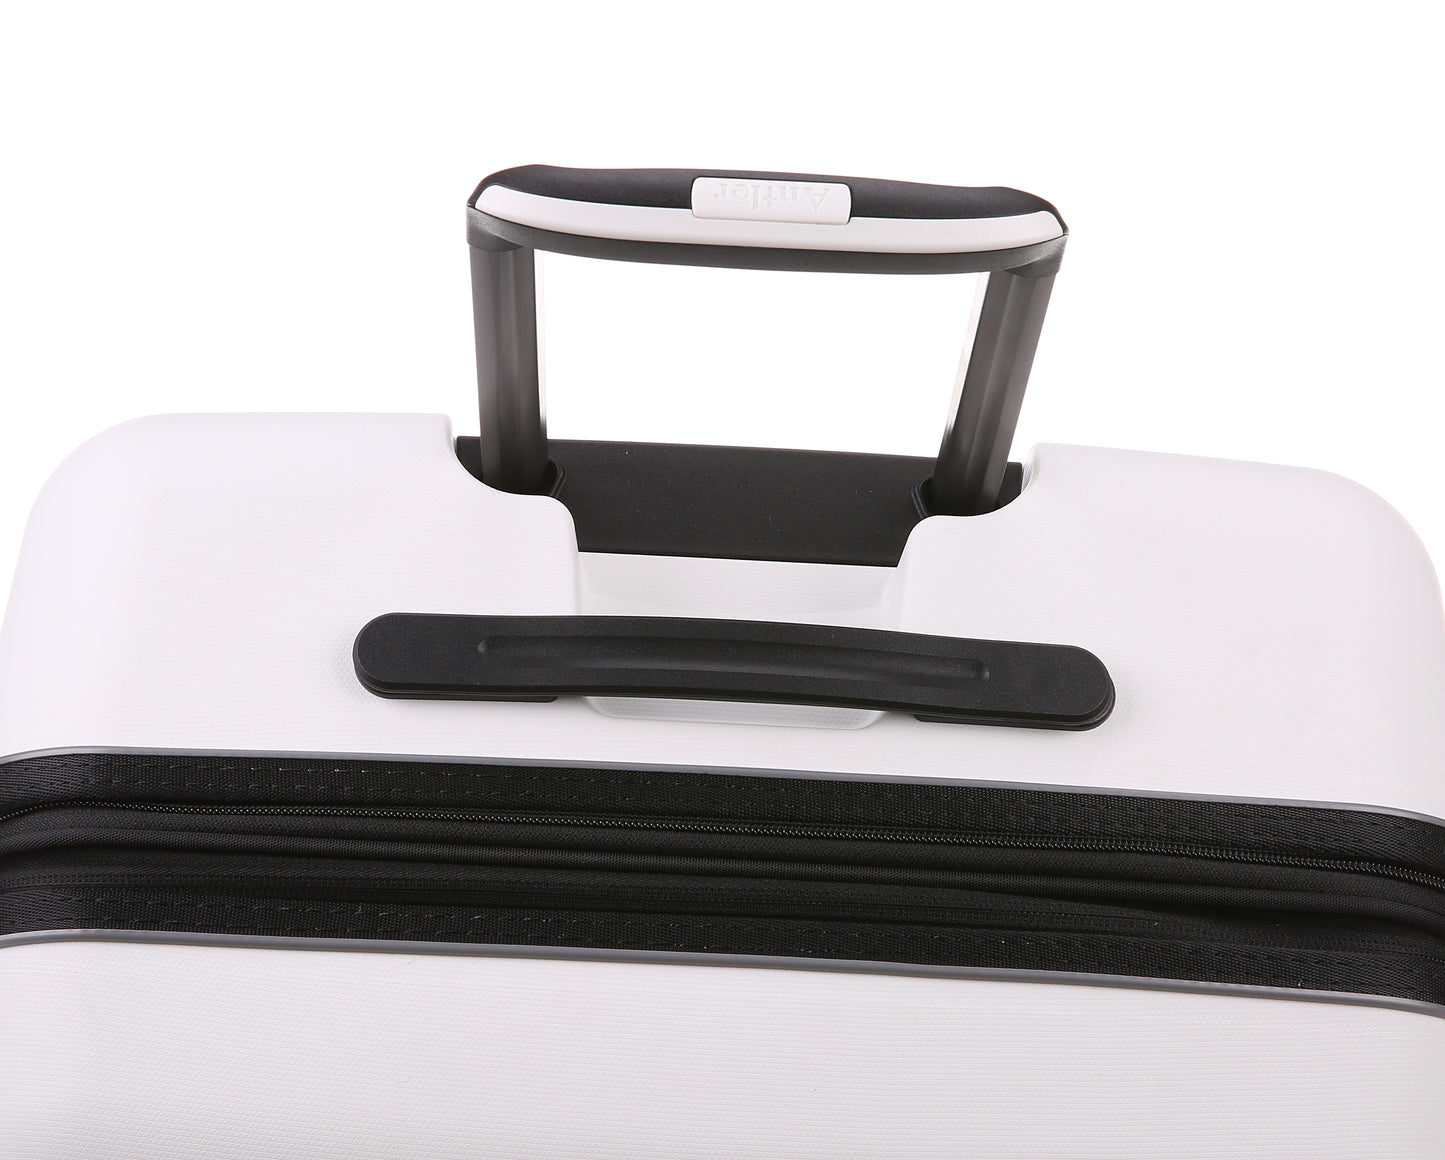 Antler - Lincoln Medium 68cm Hardside 4 Wheel Suitcase - White - rainbowbags